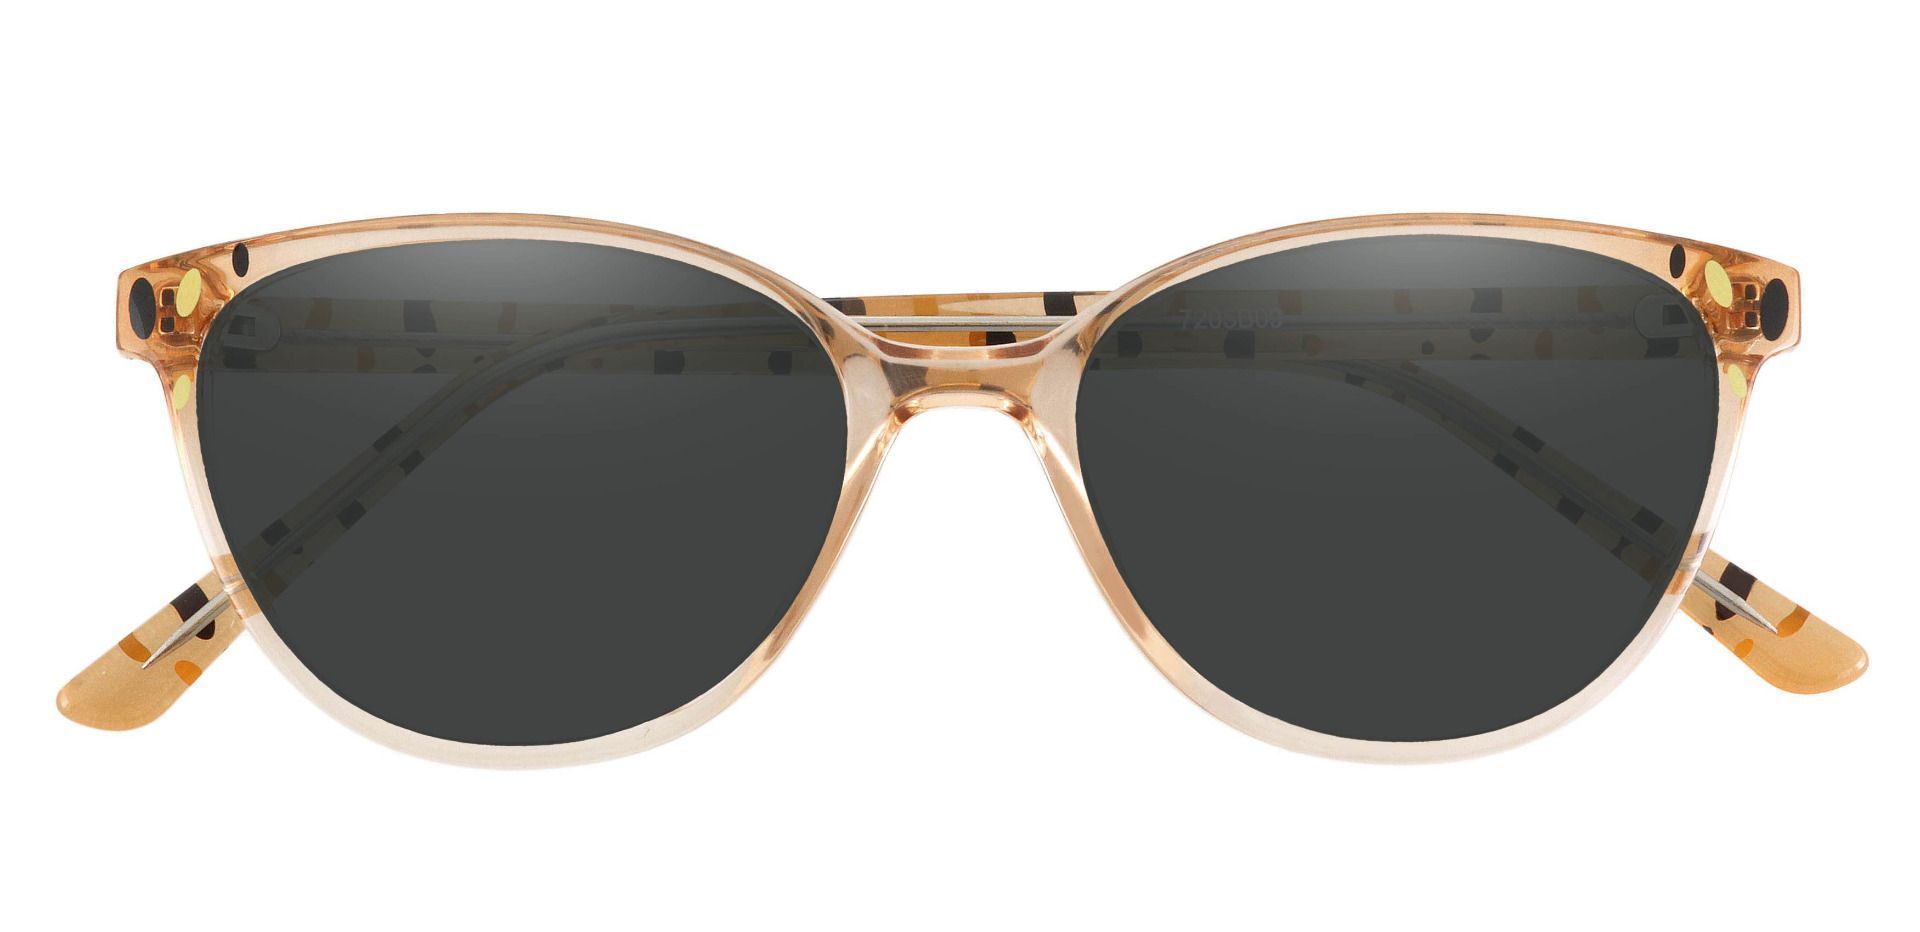 Carma Oval Prescription Sunglasses - Brown Frame With Gray Lenses